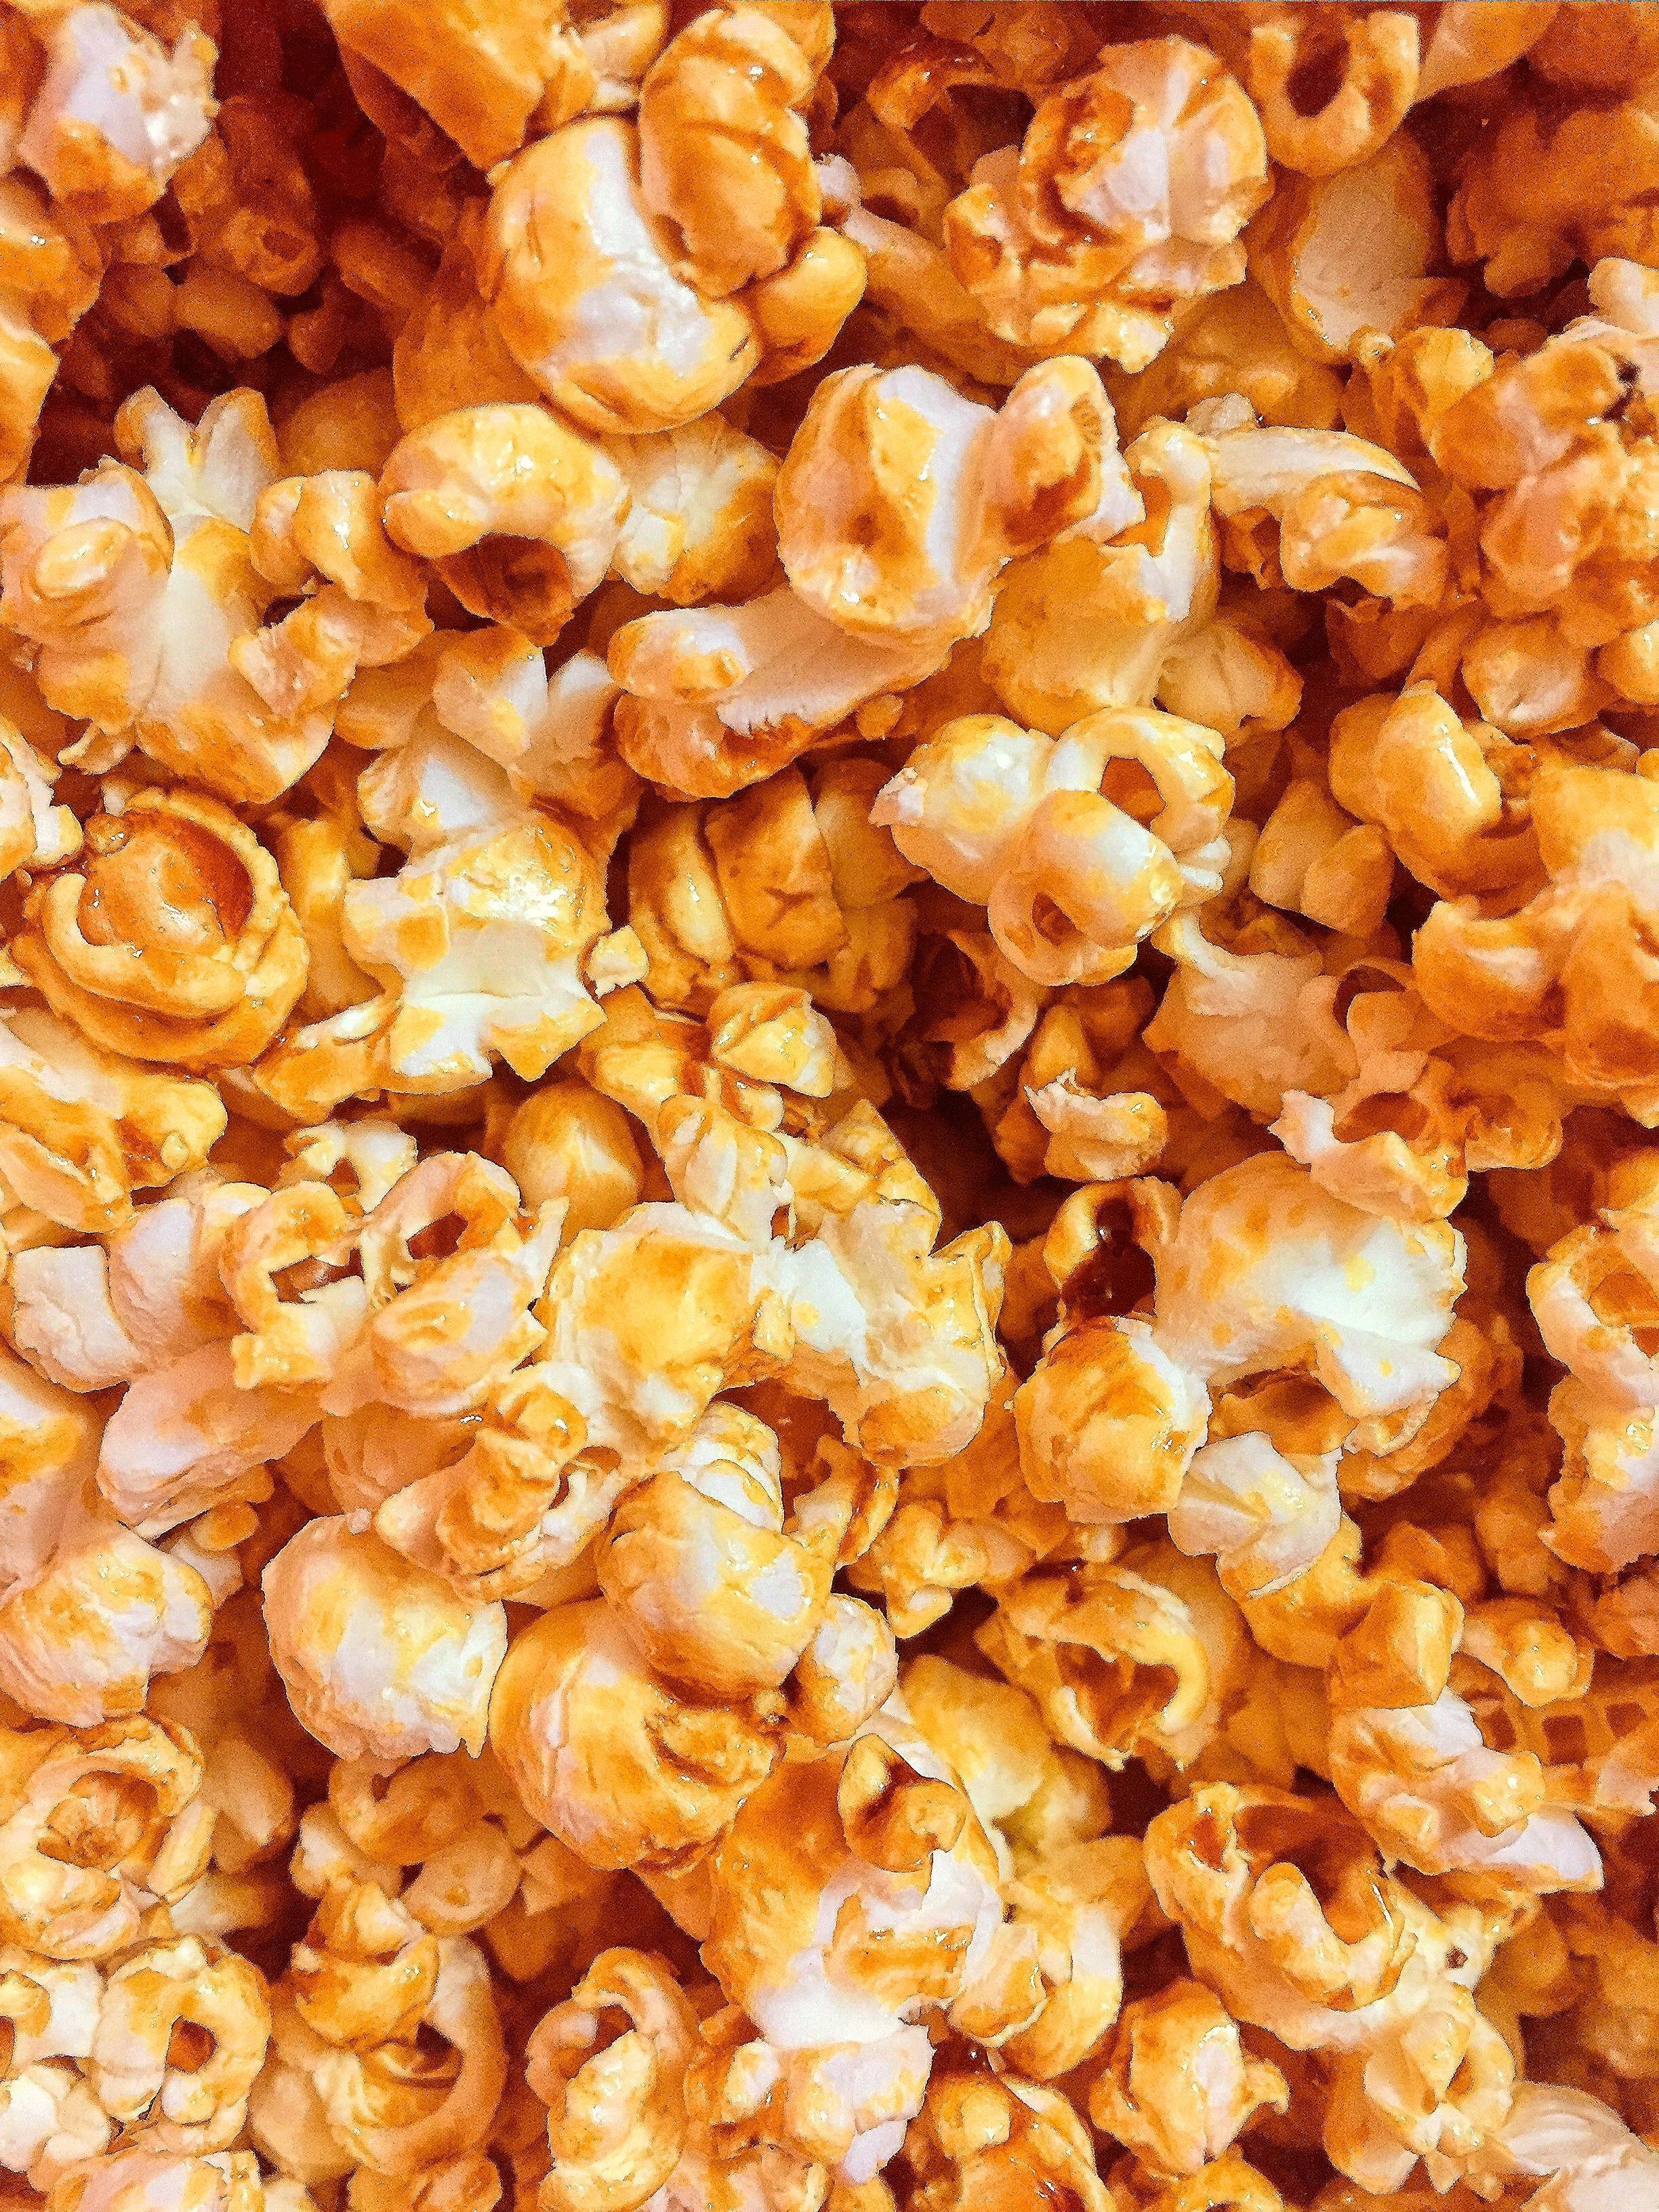 A close up of a pile of caramel popcorn - Popcorn